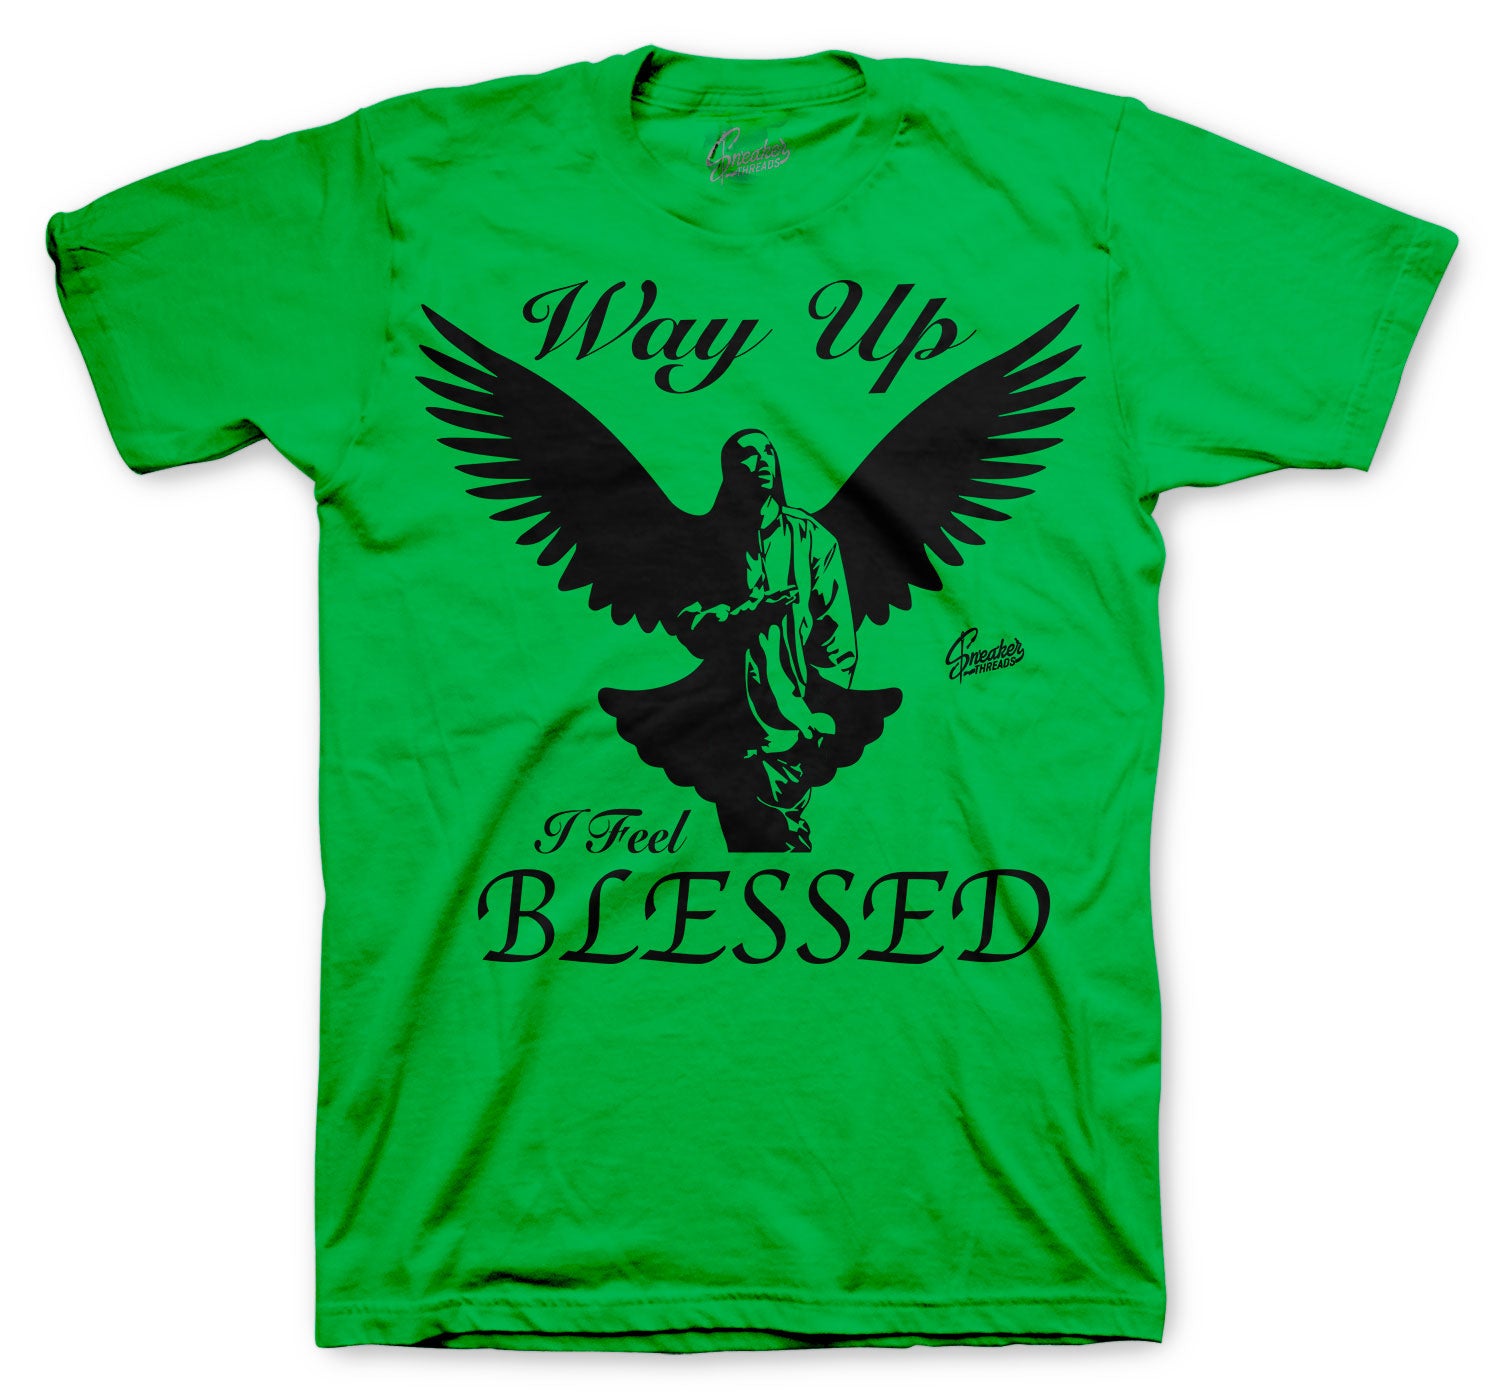 Retro 5 Oregon Shirt - Way Up - Green